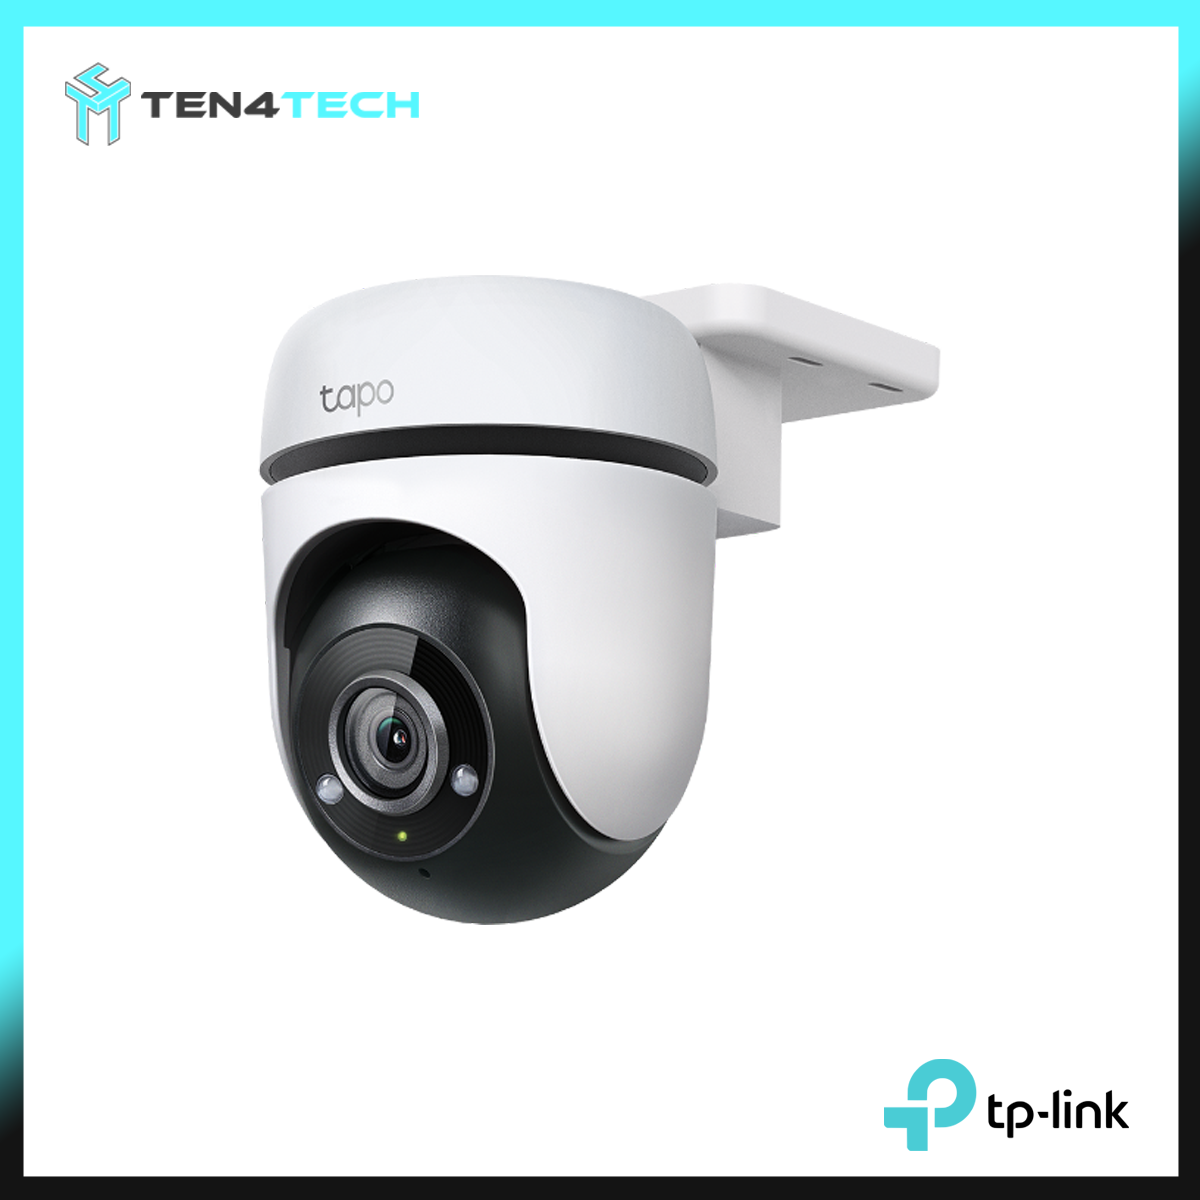 TP-Link Tapo C500 Outdoor Pan/Tilt Security WiFi Camera | Ten4tech